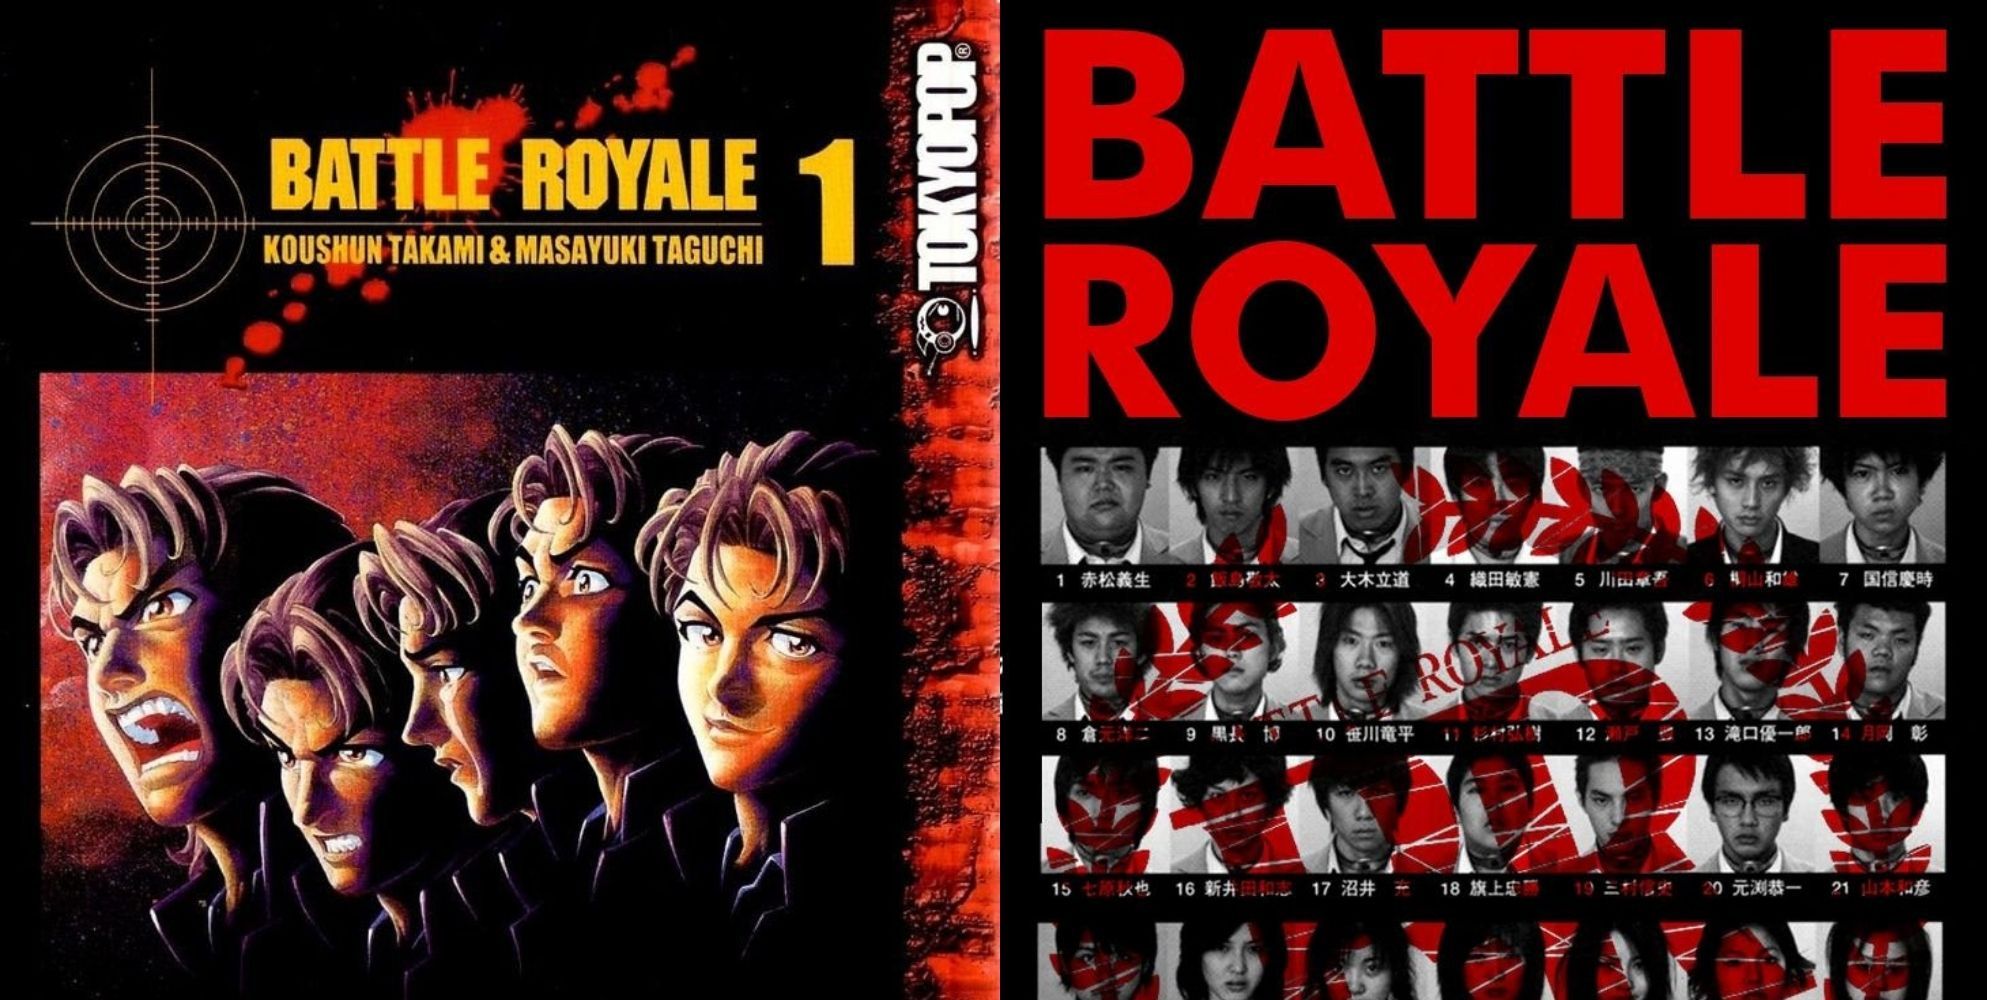 Battle Royale manga and live-action